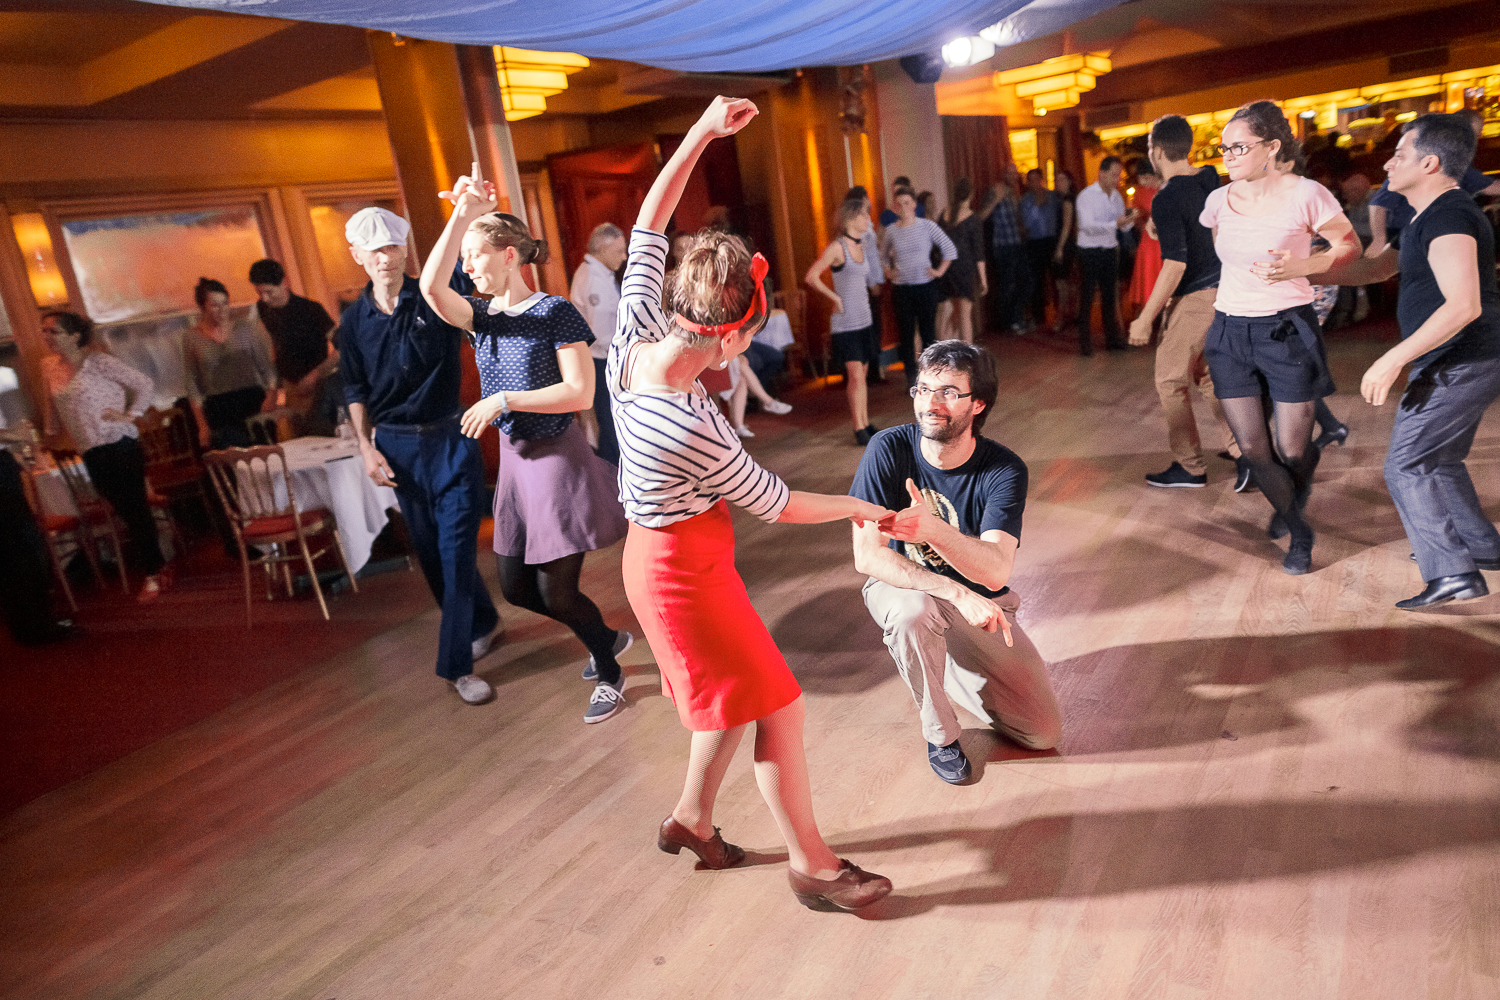  Bal Swing au Chalet du Lac avec Swing Deluxe. For Dancers Only: http://d.pr/1fEEY - http://www.ebobrie.com/wonder-follow-weekend-2015 